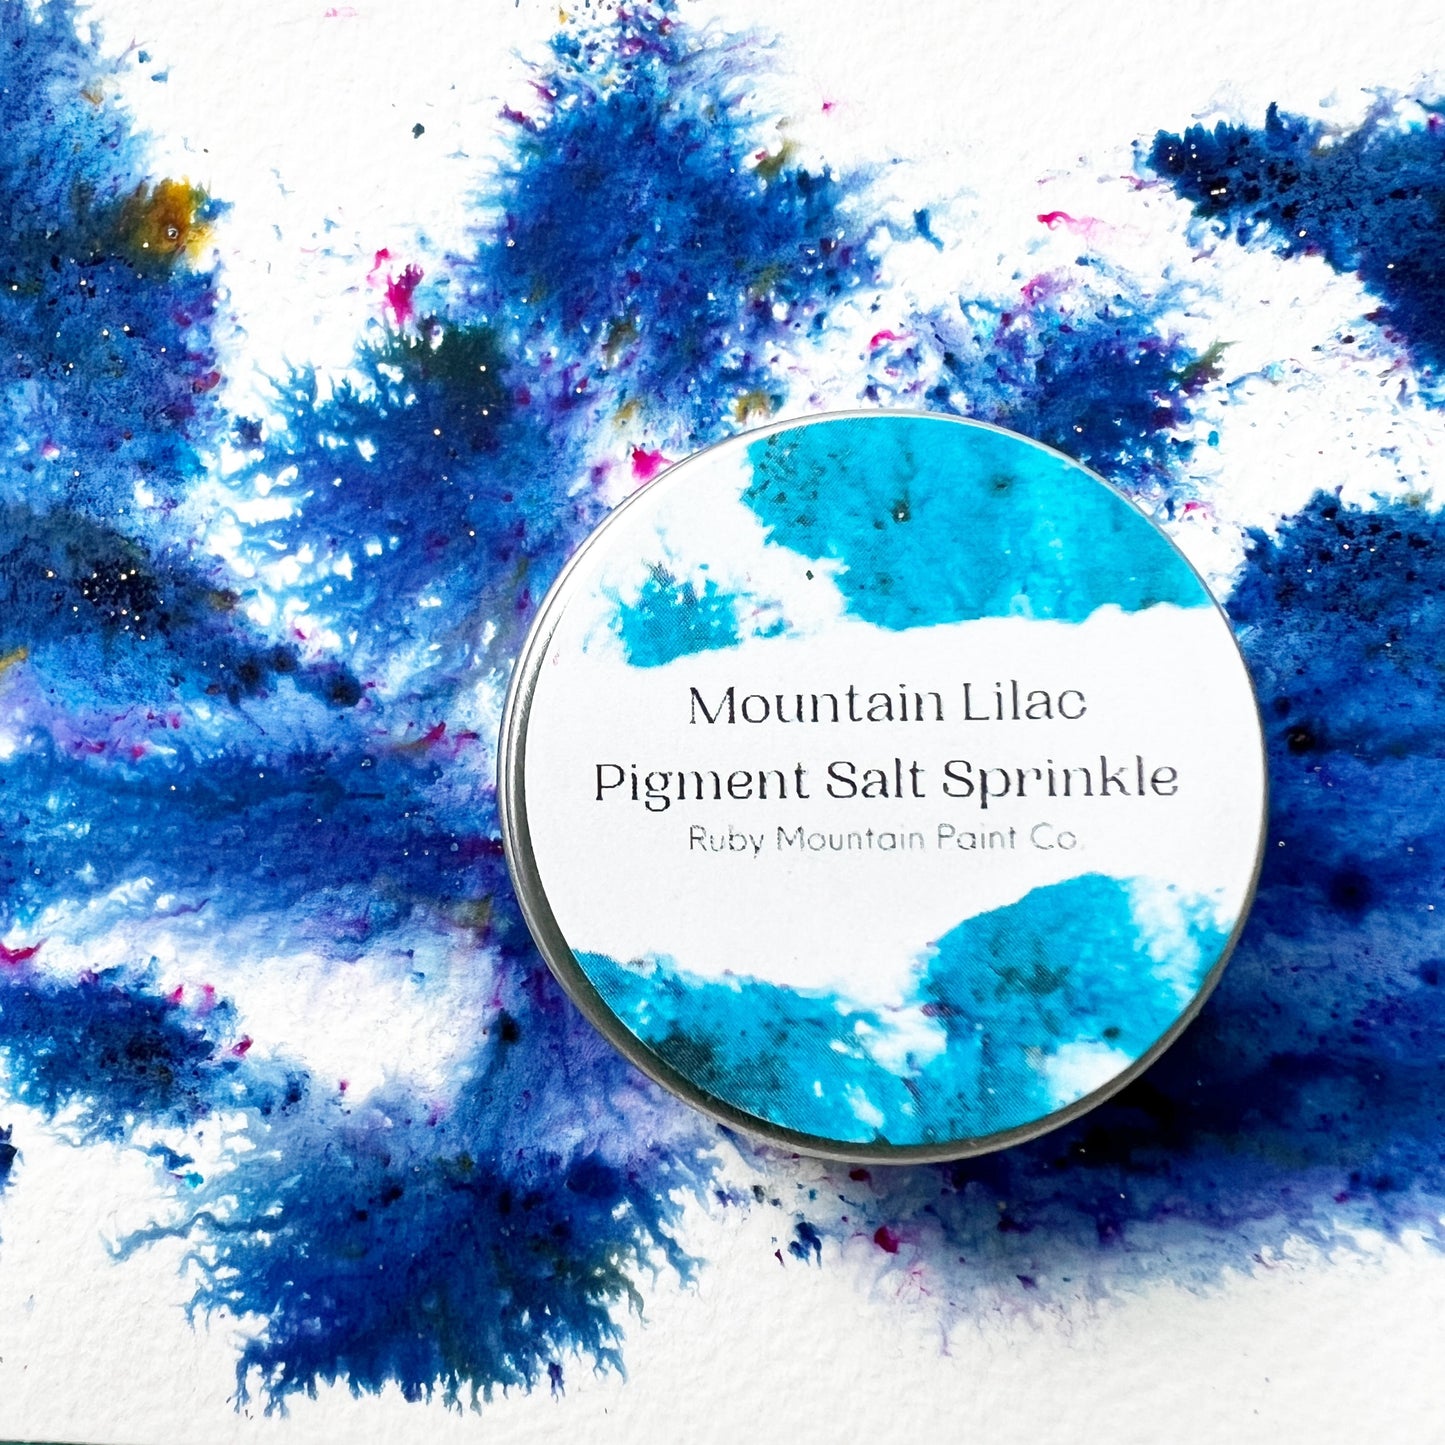 Mountain Lilac Pigment Salt Sprinkle